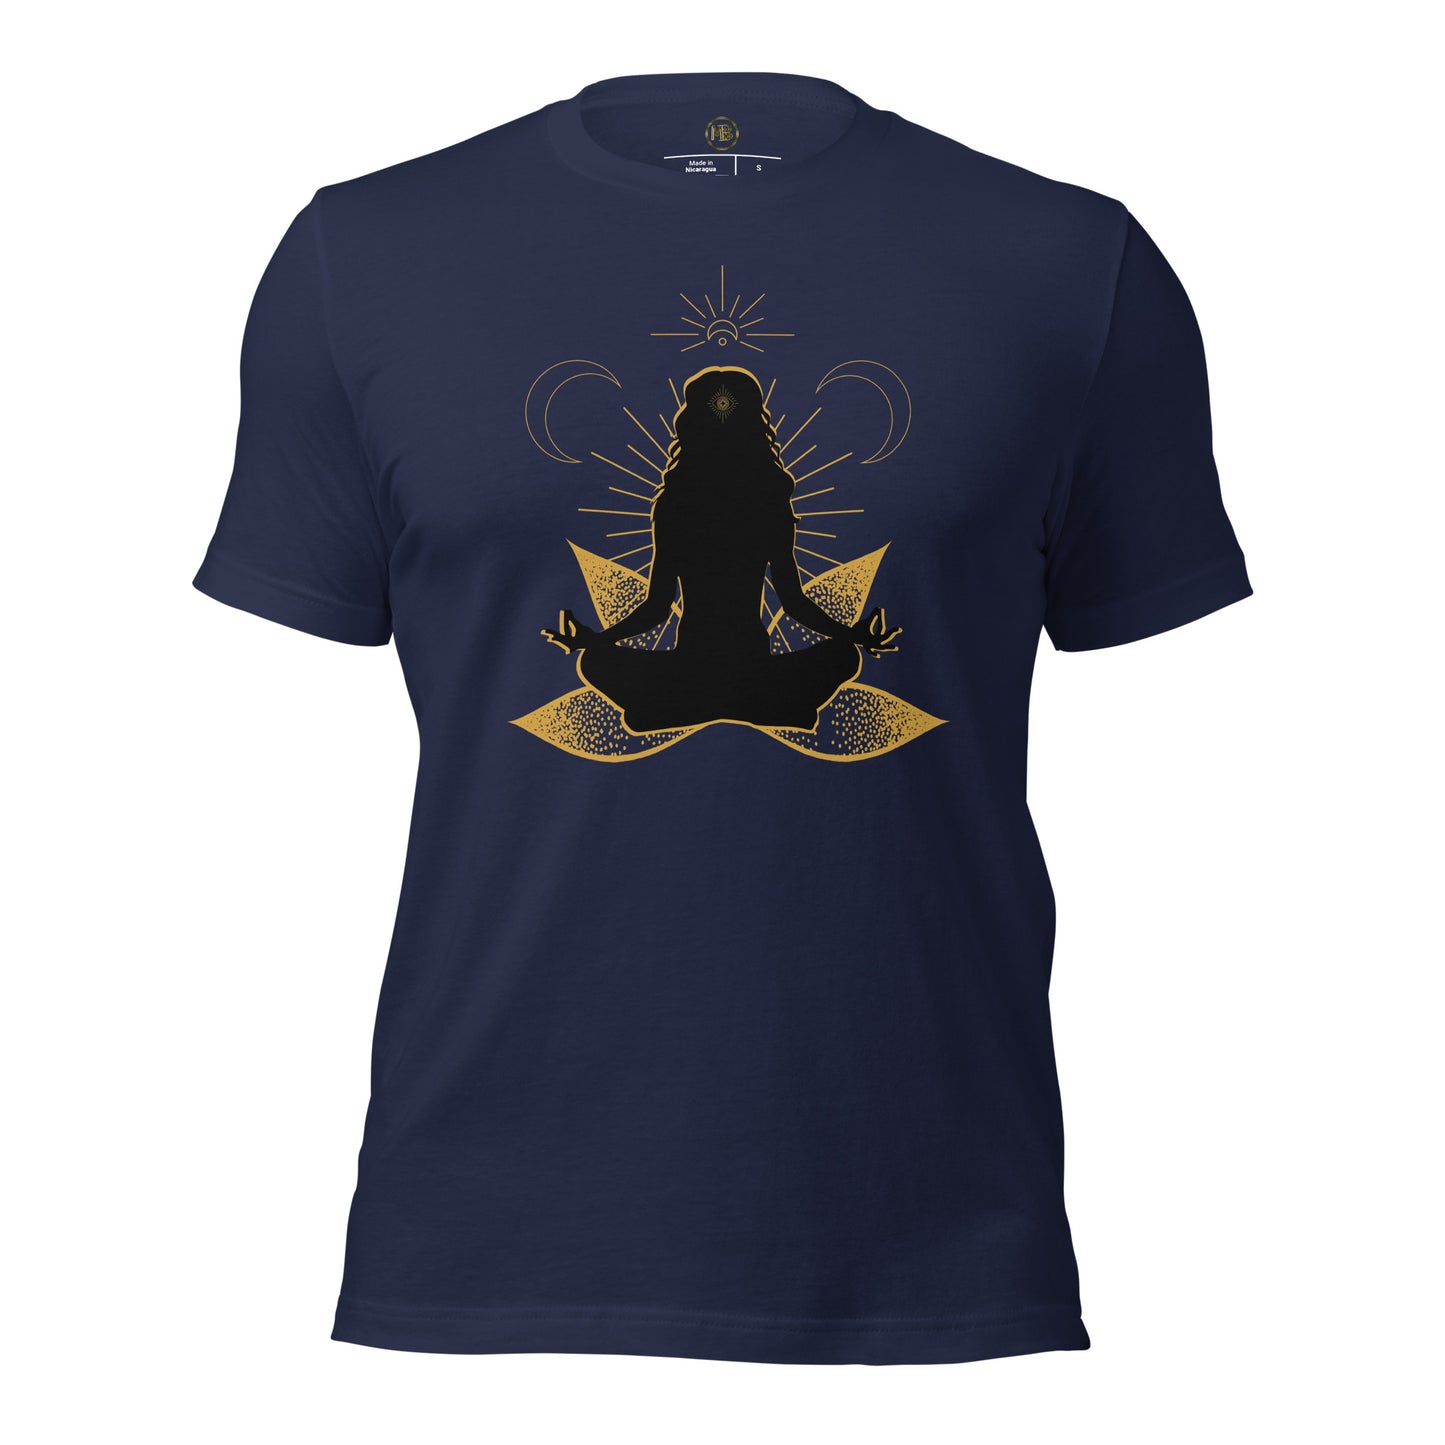 Glowing Moon Goddess Unisex T-Shirt